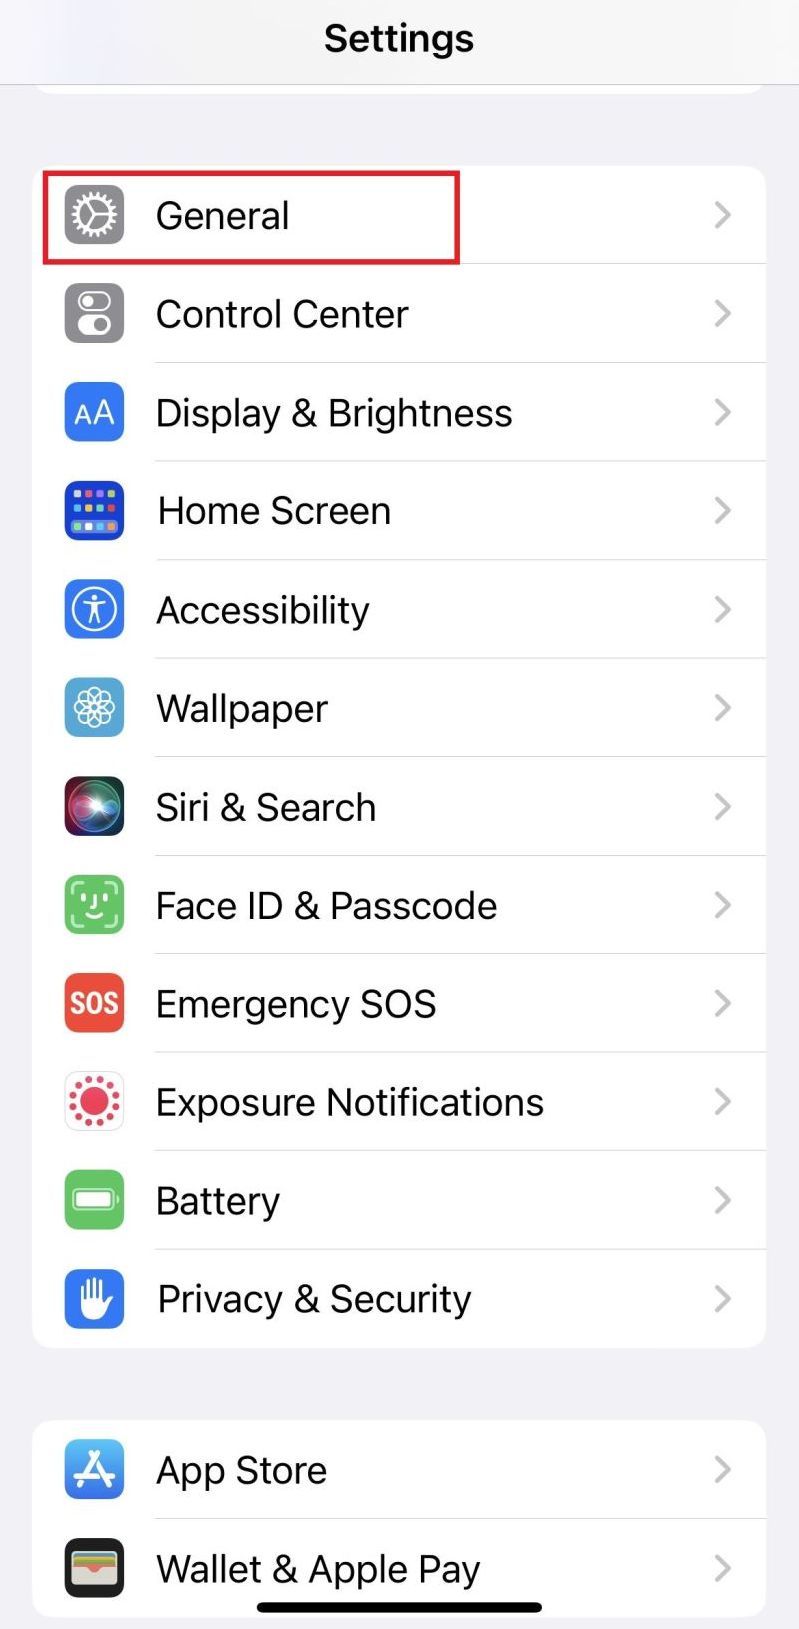 Screenshot of General option under iPhone's Settings